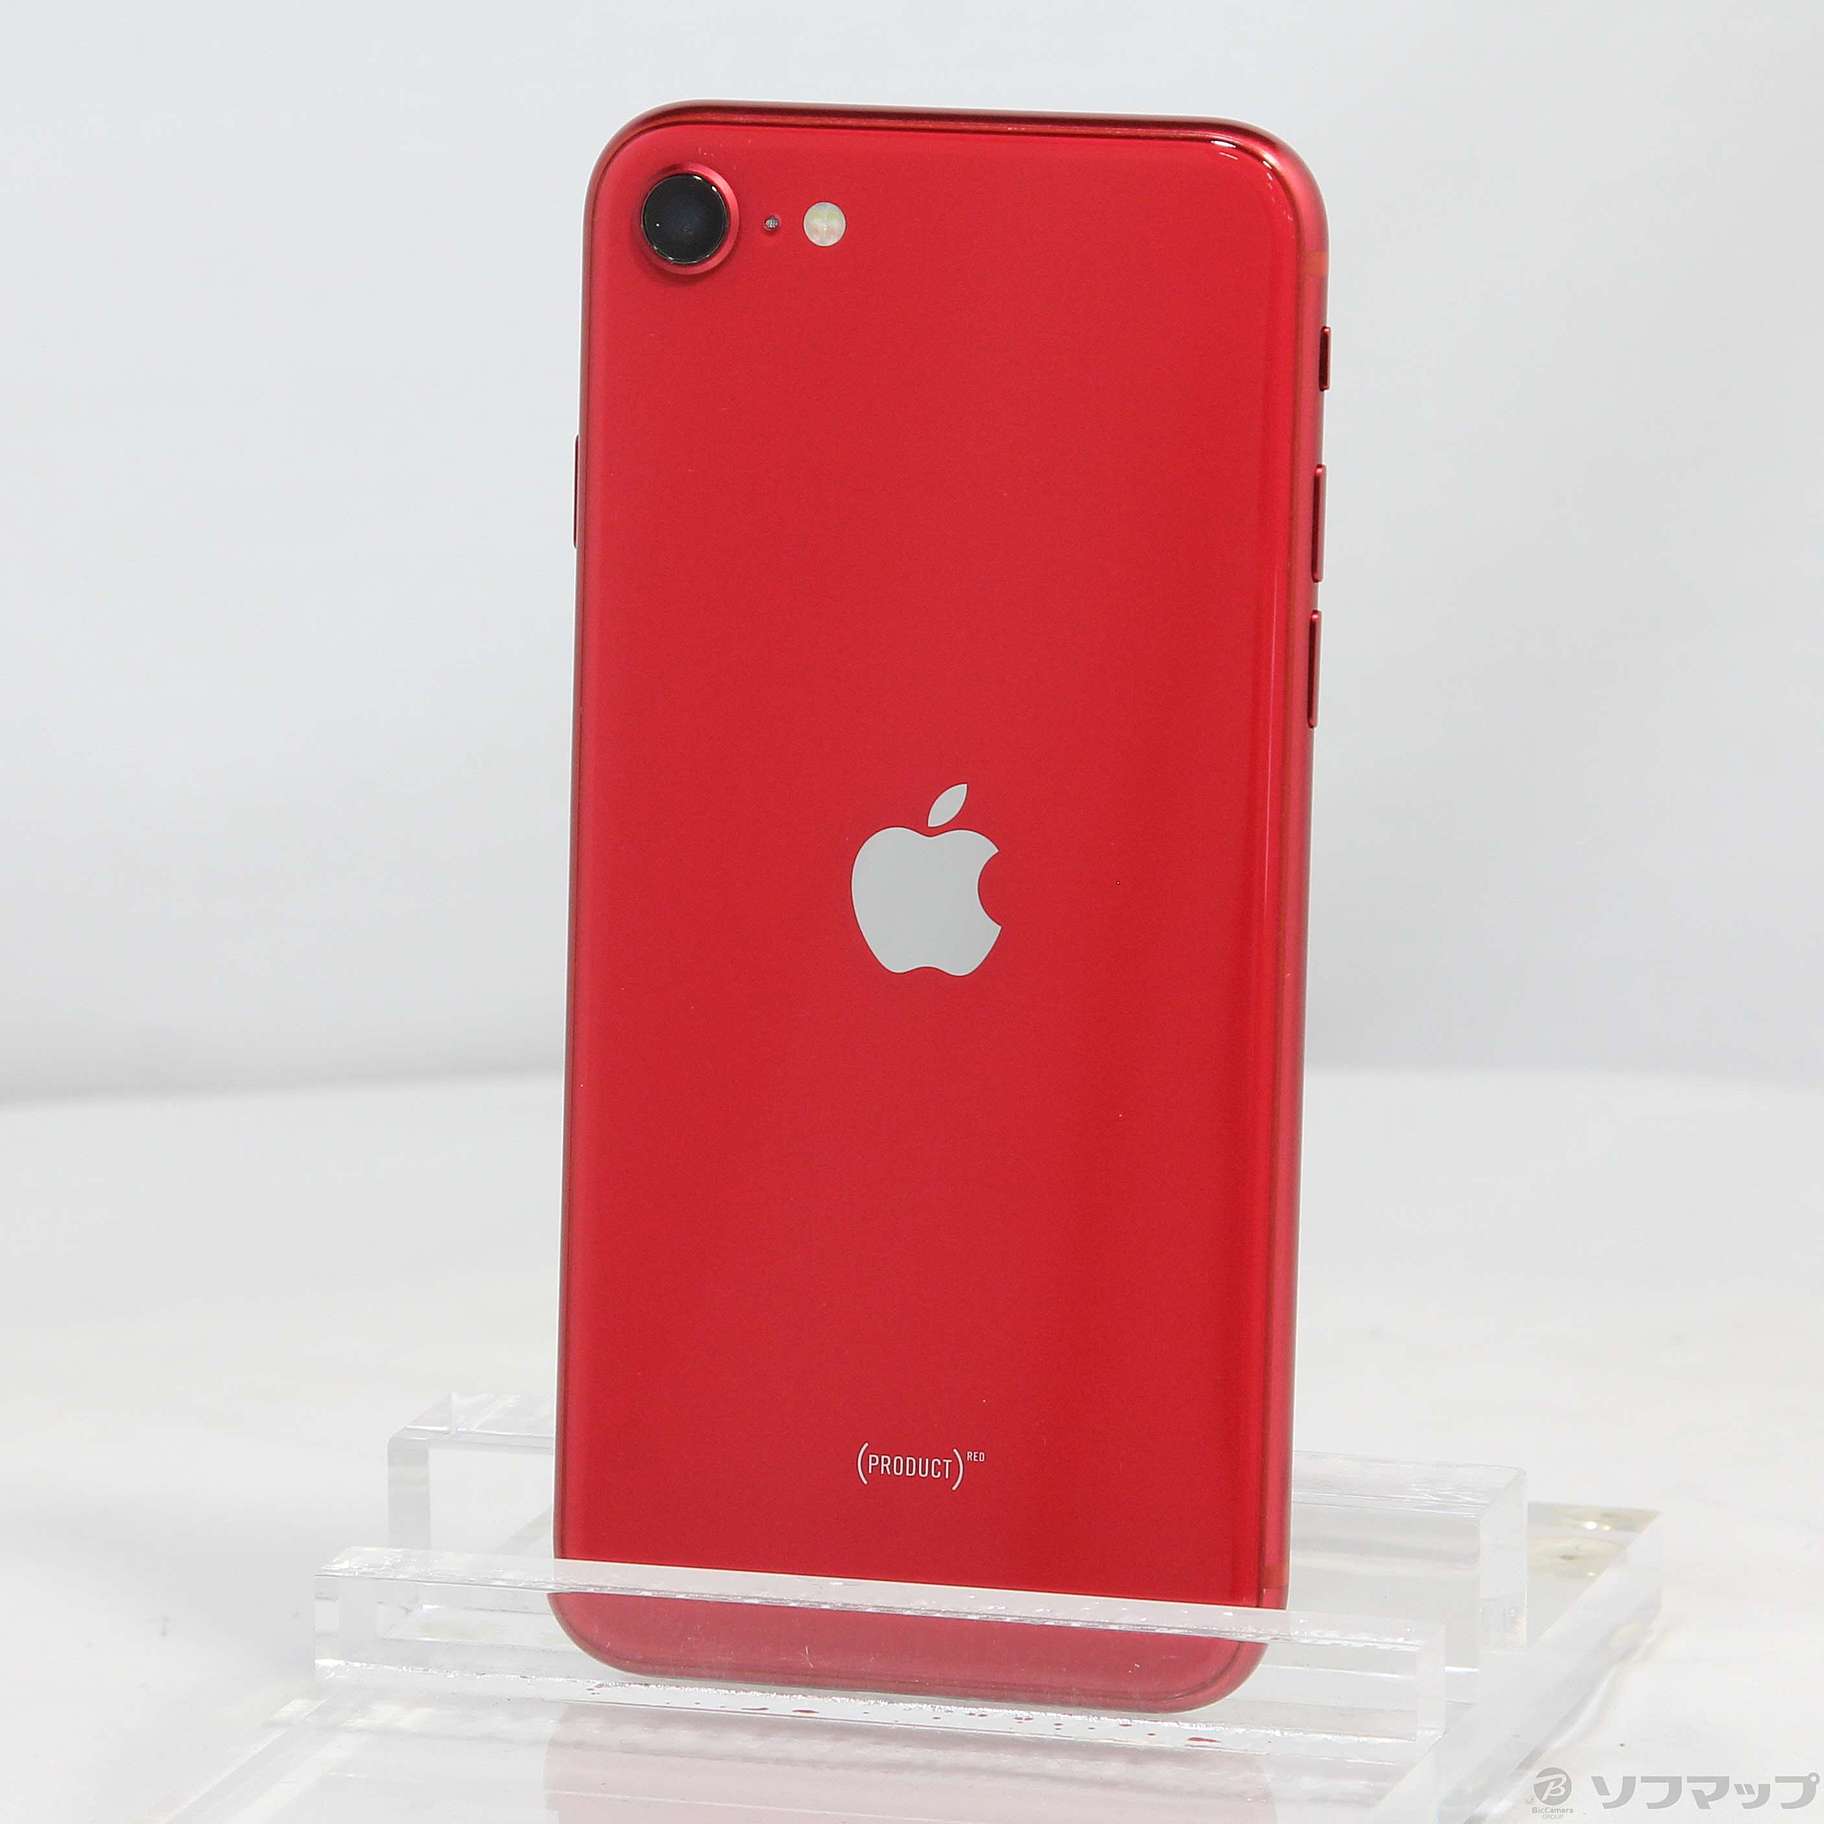 新品未開封 iPhone SE 第2世代 128GB (PRODUCT)RED